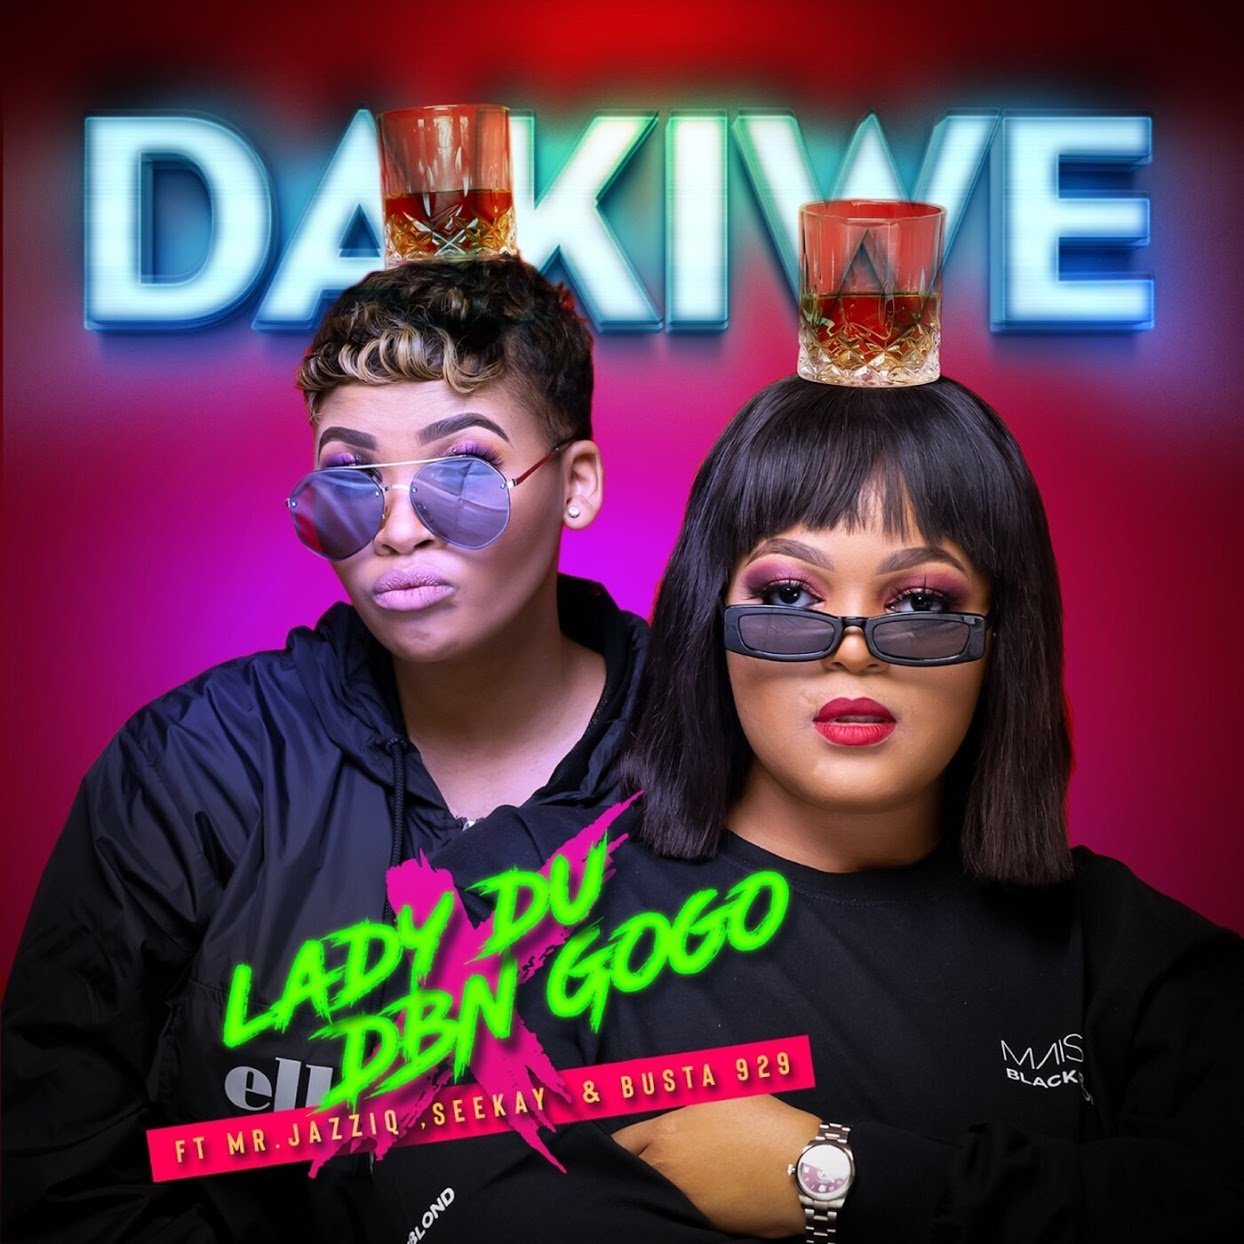 Lady Du & DBN Gogo - Dakiwe (feat. Mr JazziQ, Seekay & Busta 929)